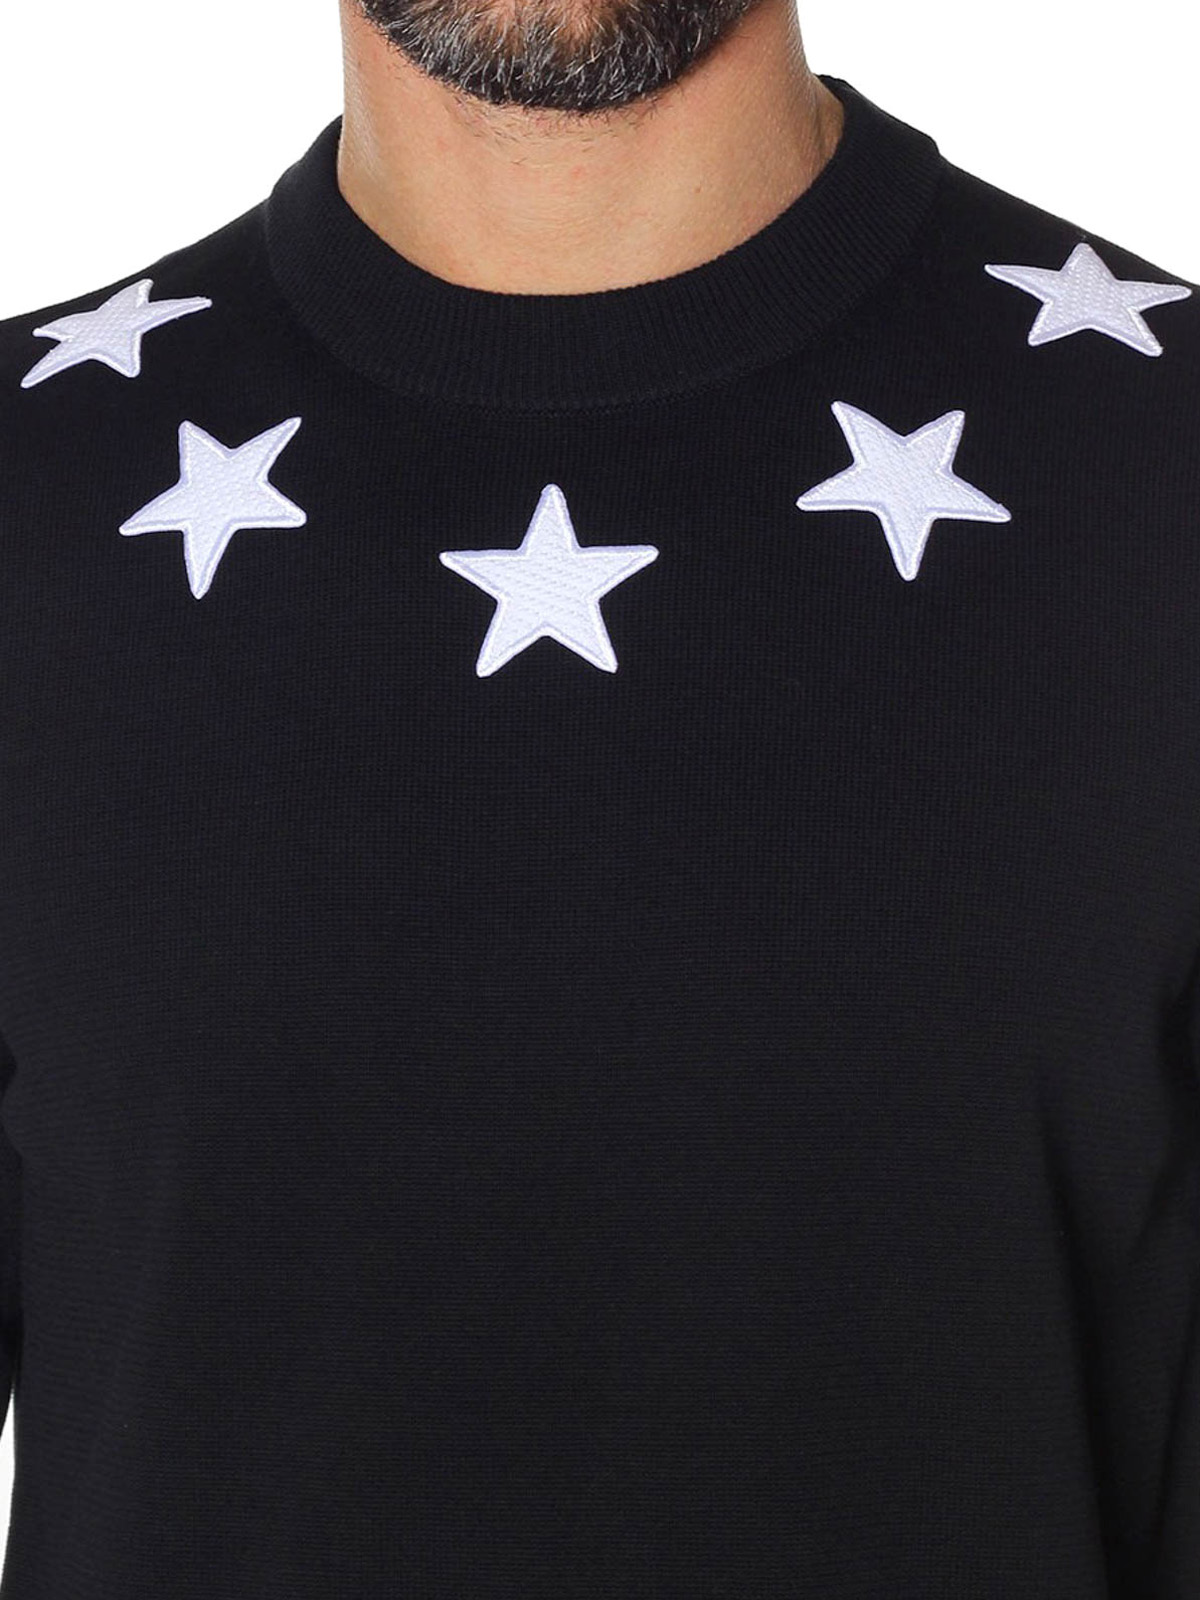 Crew necks Givenchy - Star patch black 